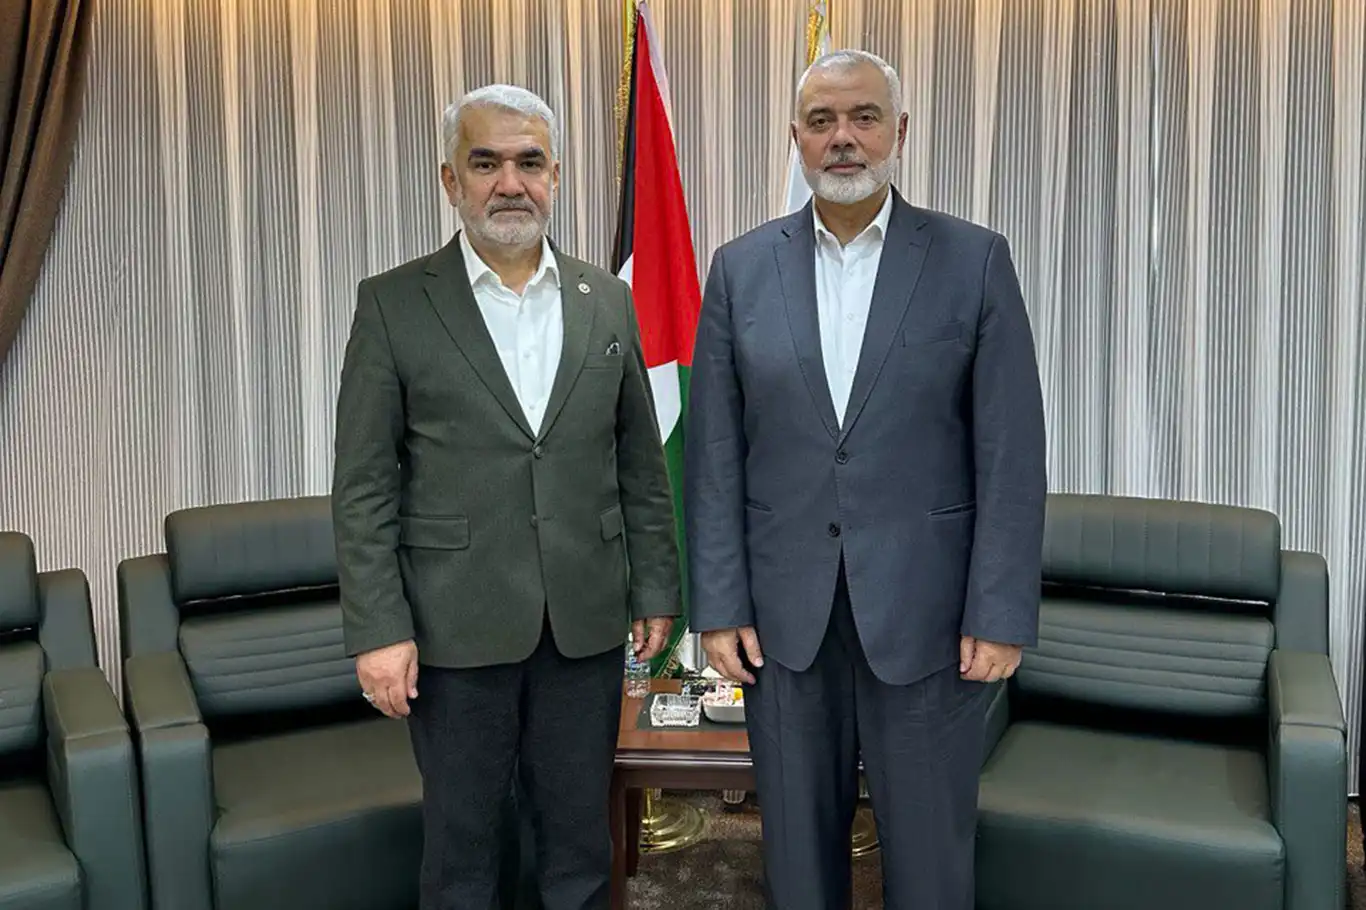 HÜDA PAR leader meets Hamas chief to discuss Gaza crisis